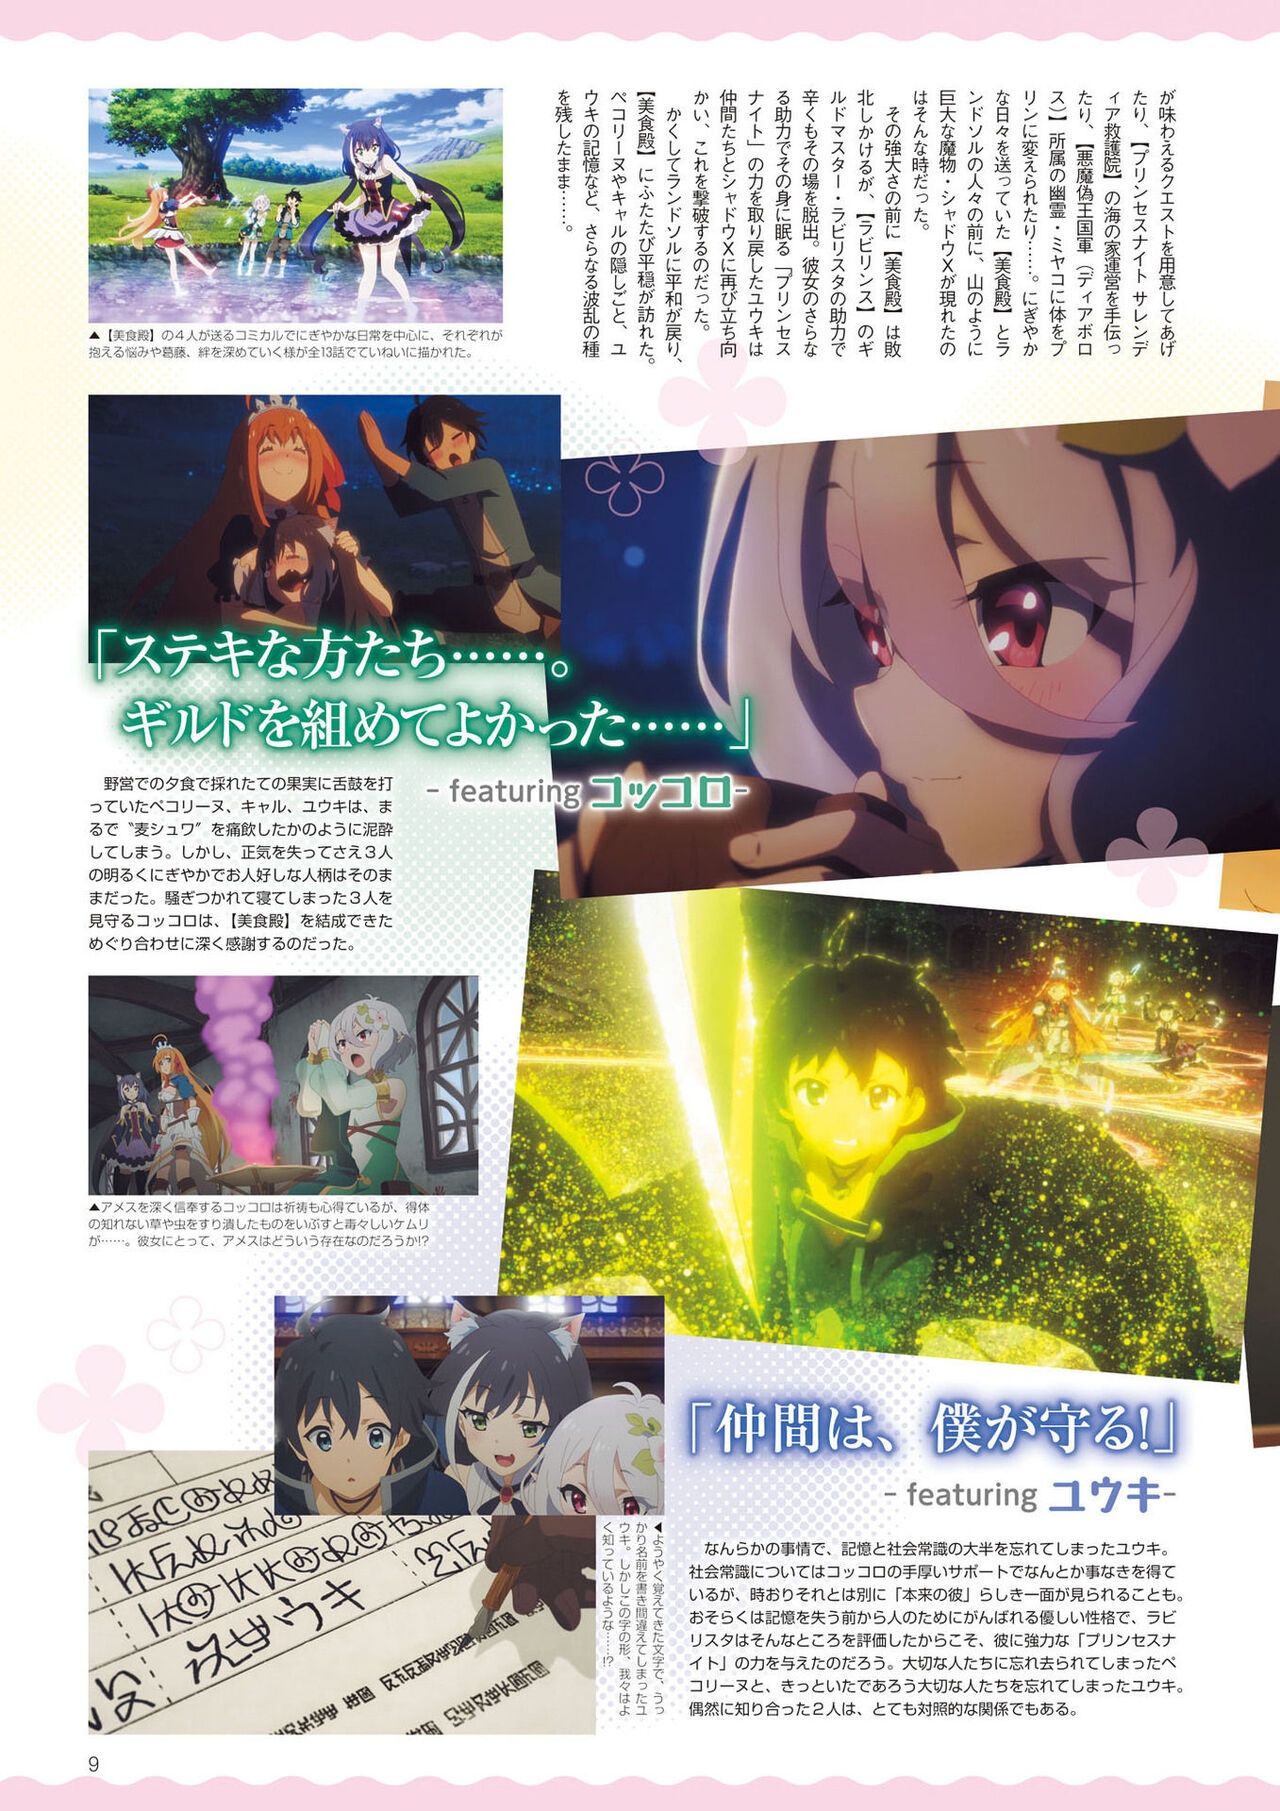 Dengeki G's Magazine #297 - April 2022 6